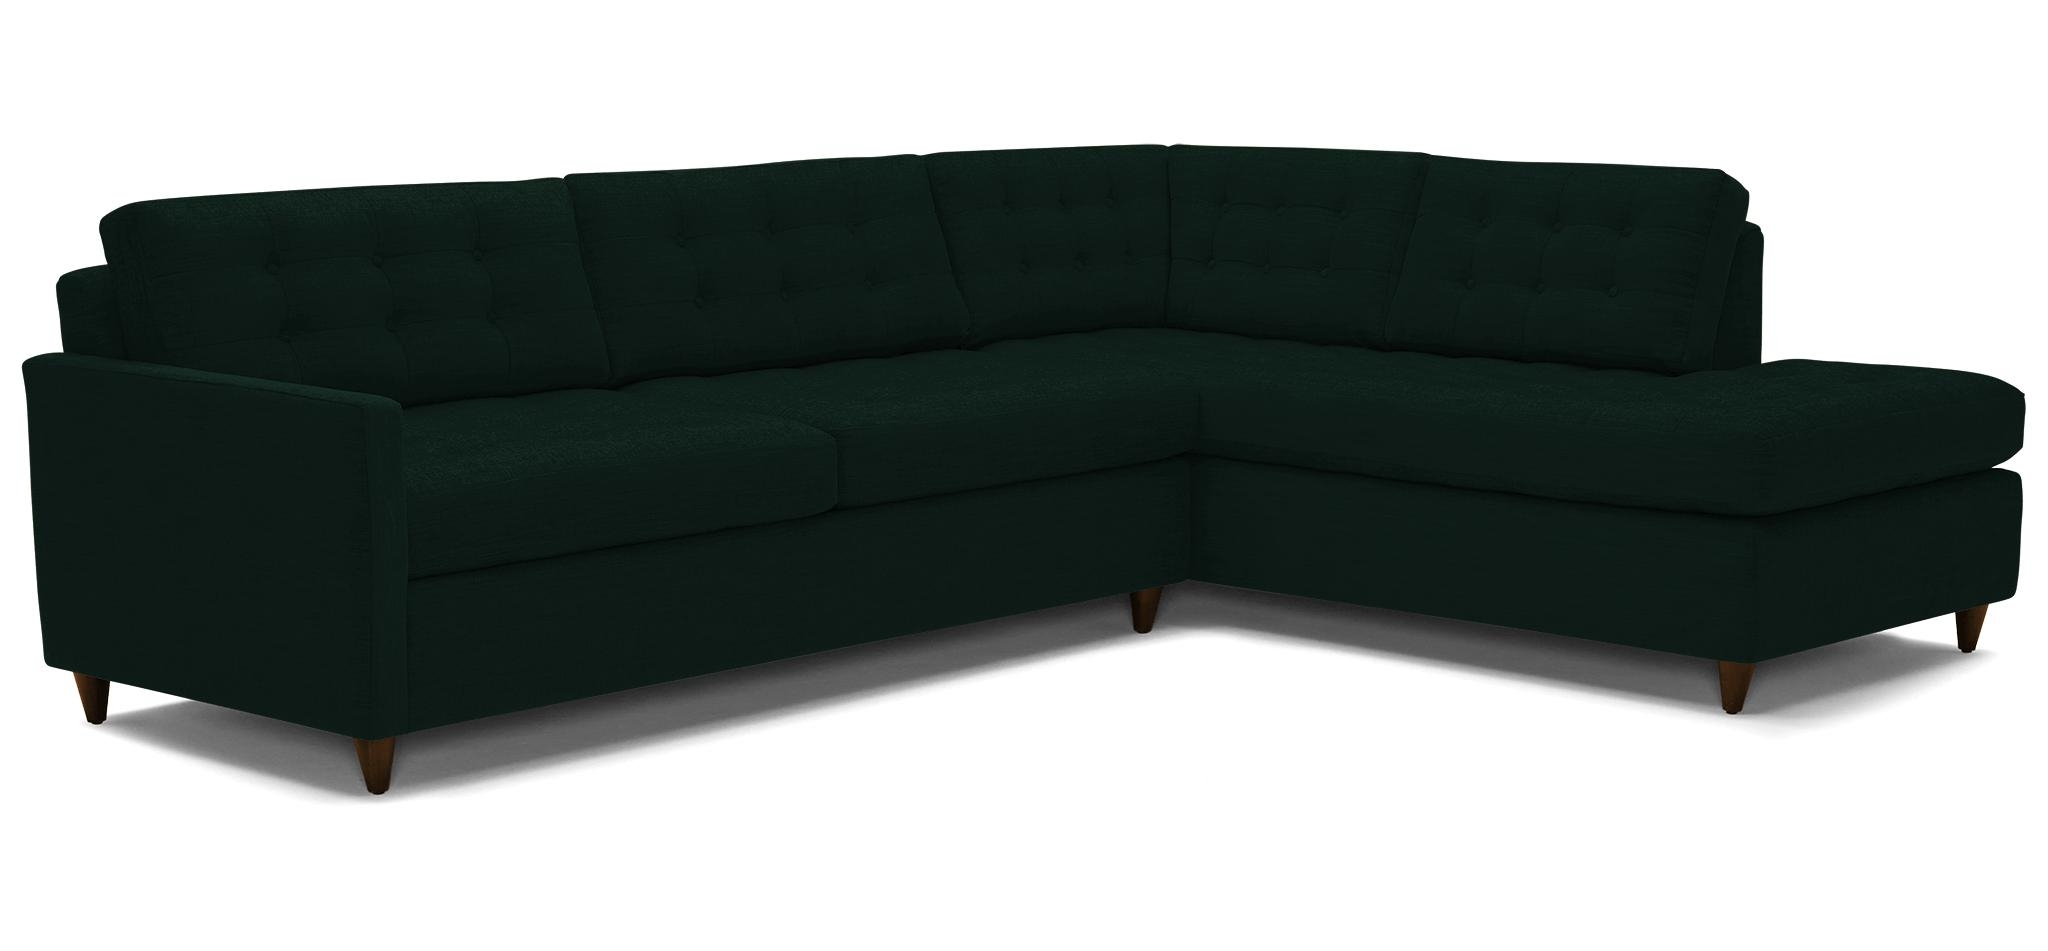 Green Eliot Mid Century Modern Bumper Sleeper Sectional - Royale Evergreen - Mocha - Left - Image 1